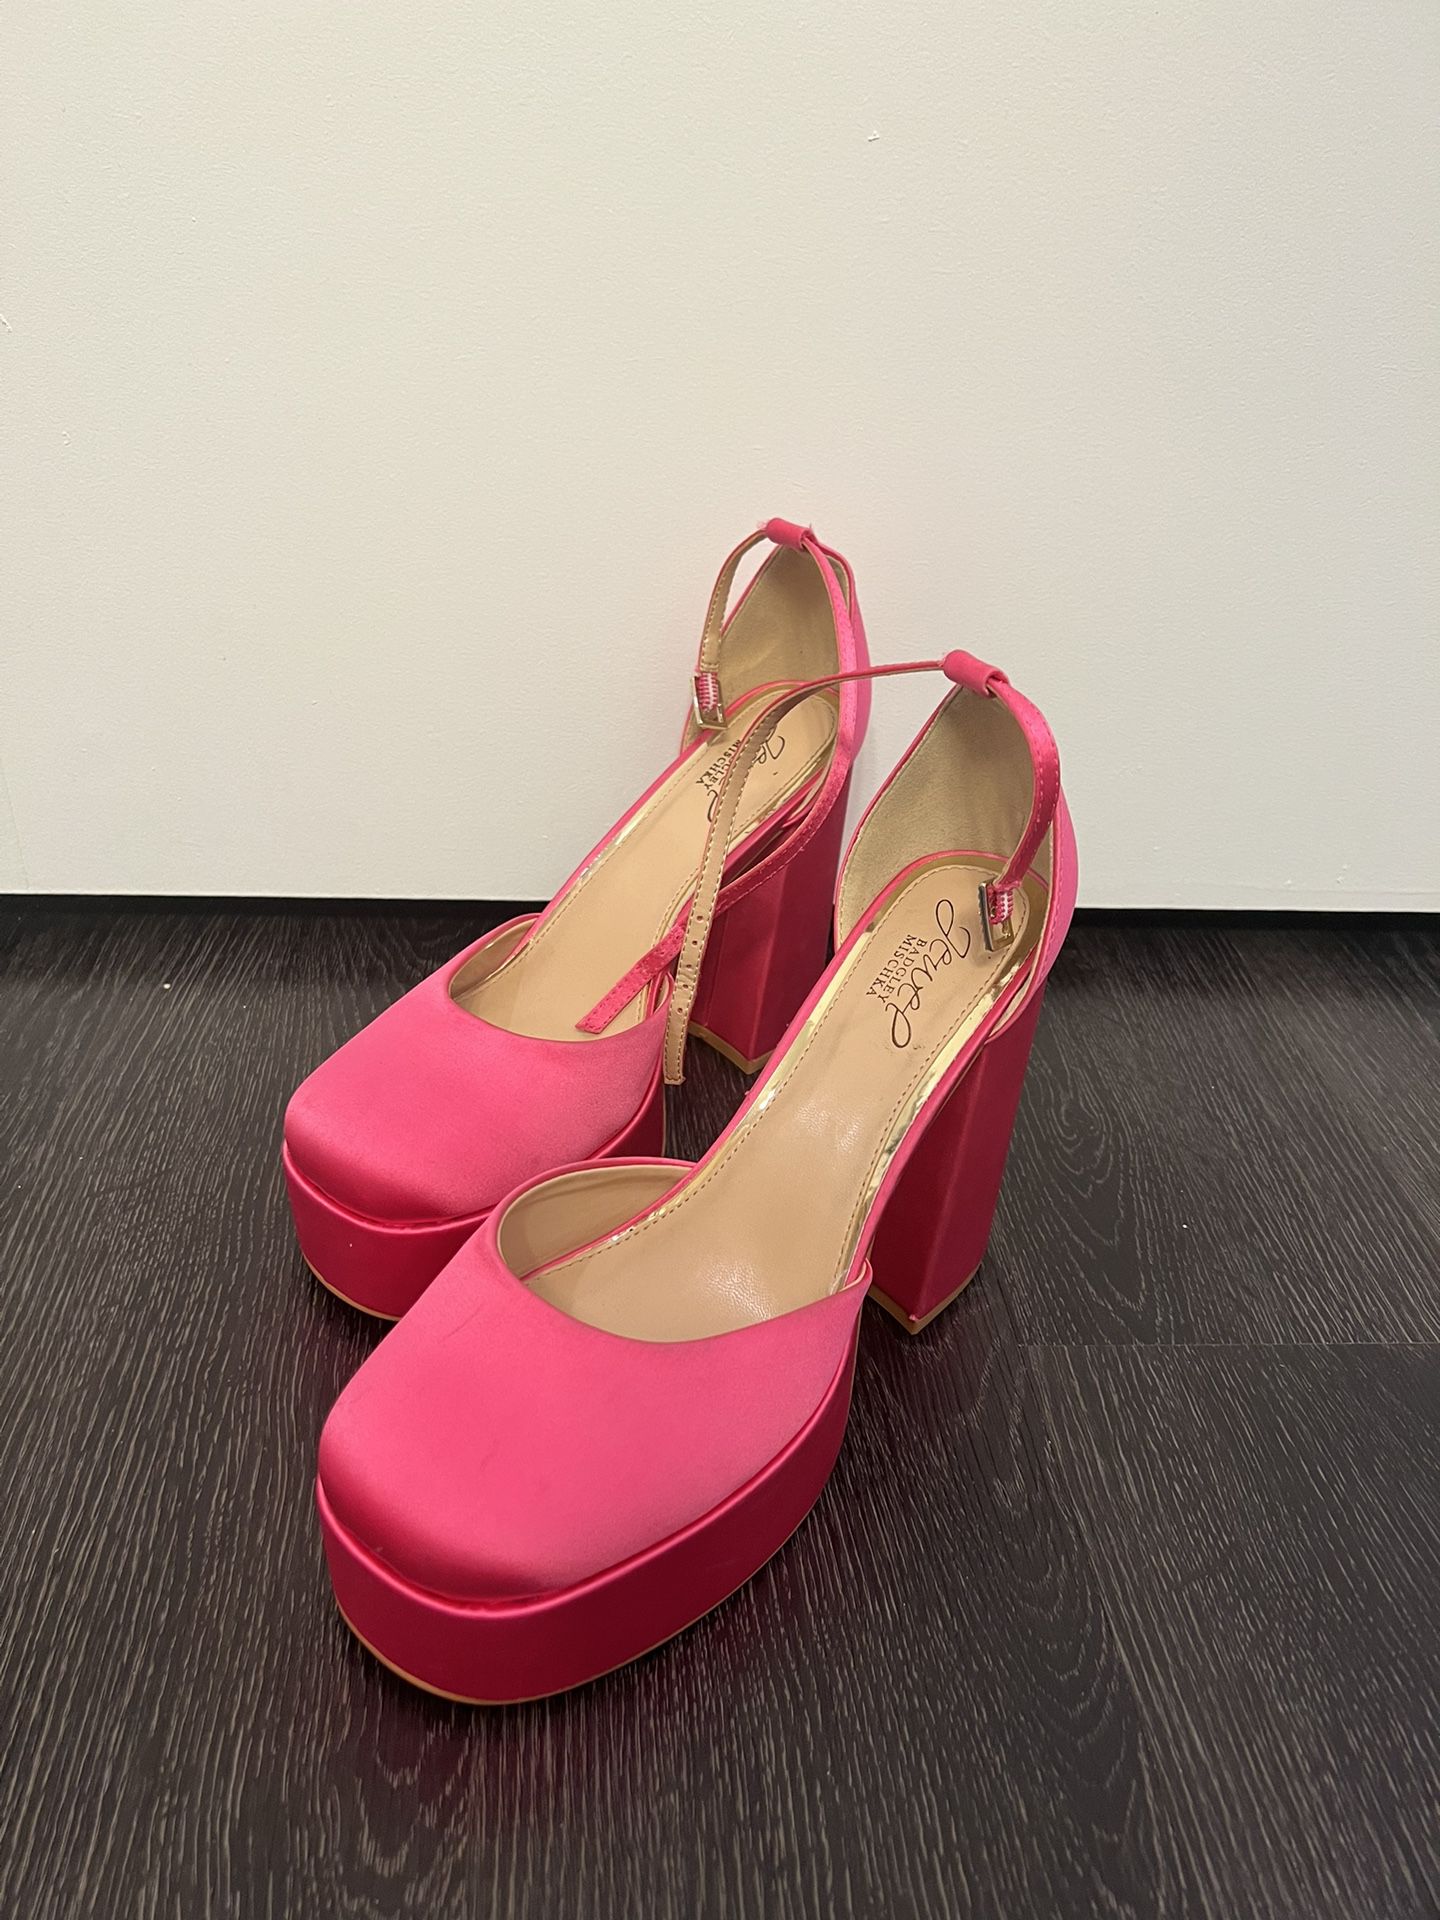 Jewel Badgley Mischka Platform Heels Pink Size 8.5